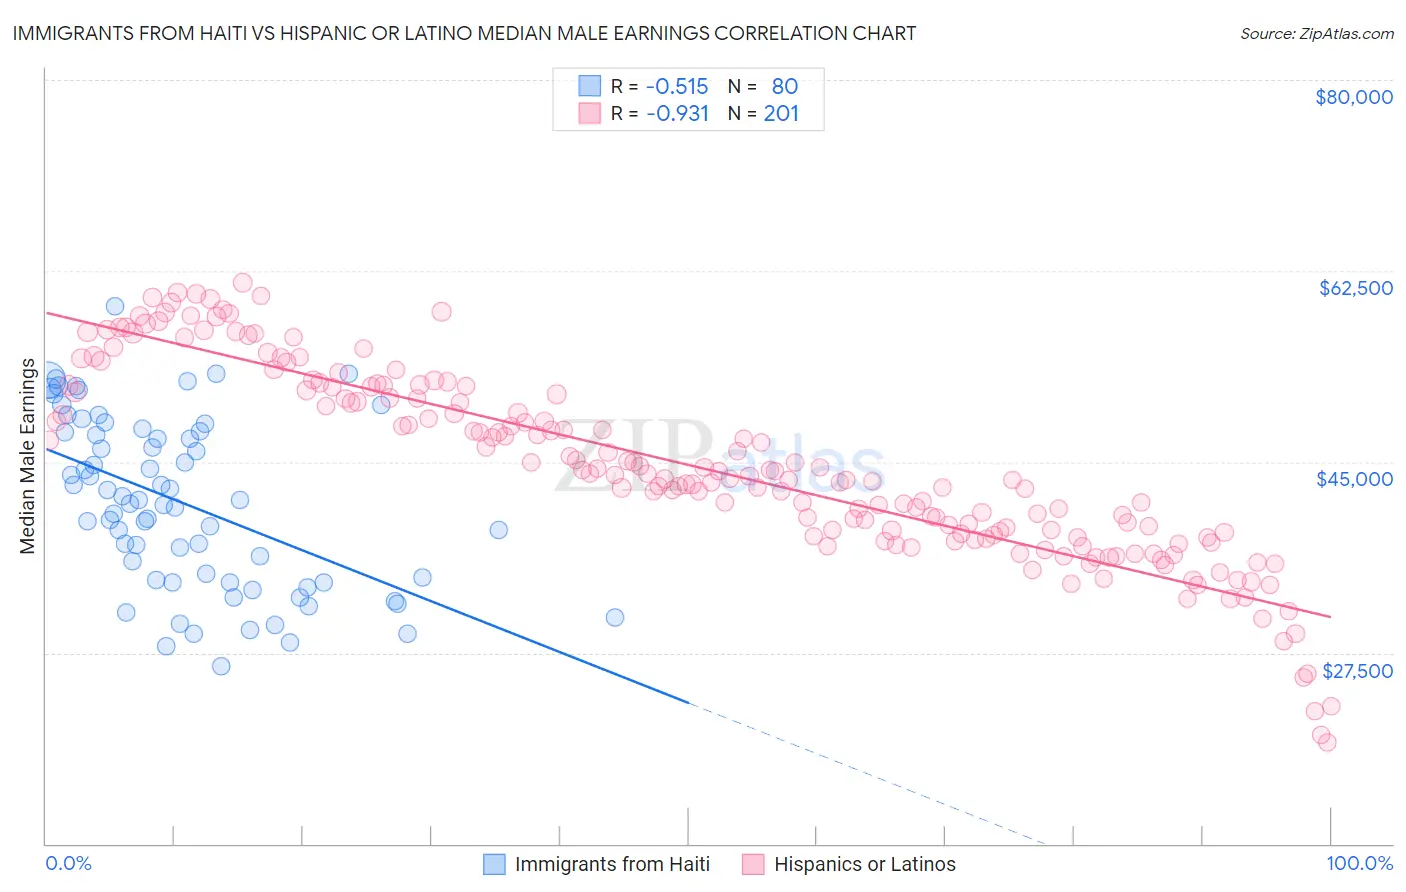 Immigrants from Haiti vs Hispanic or Latino Median Male Earnings